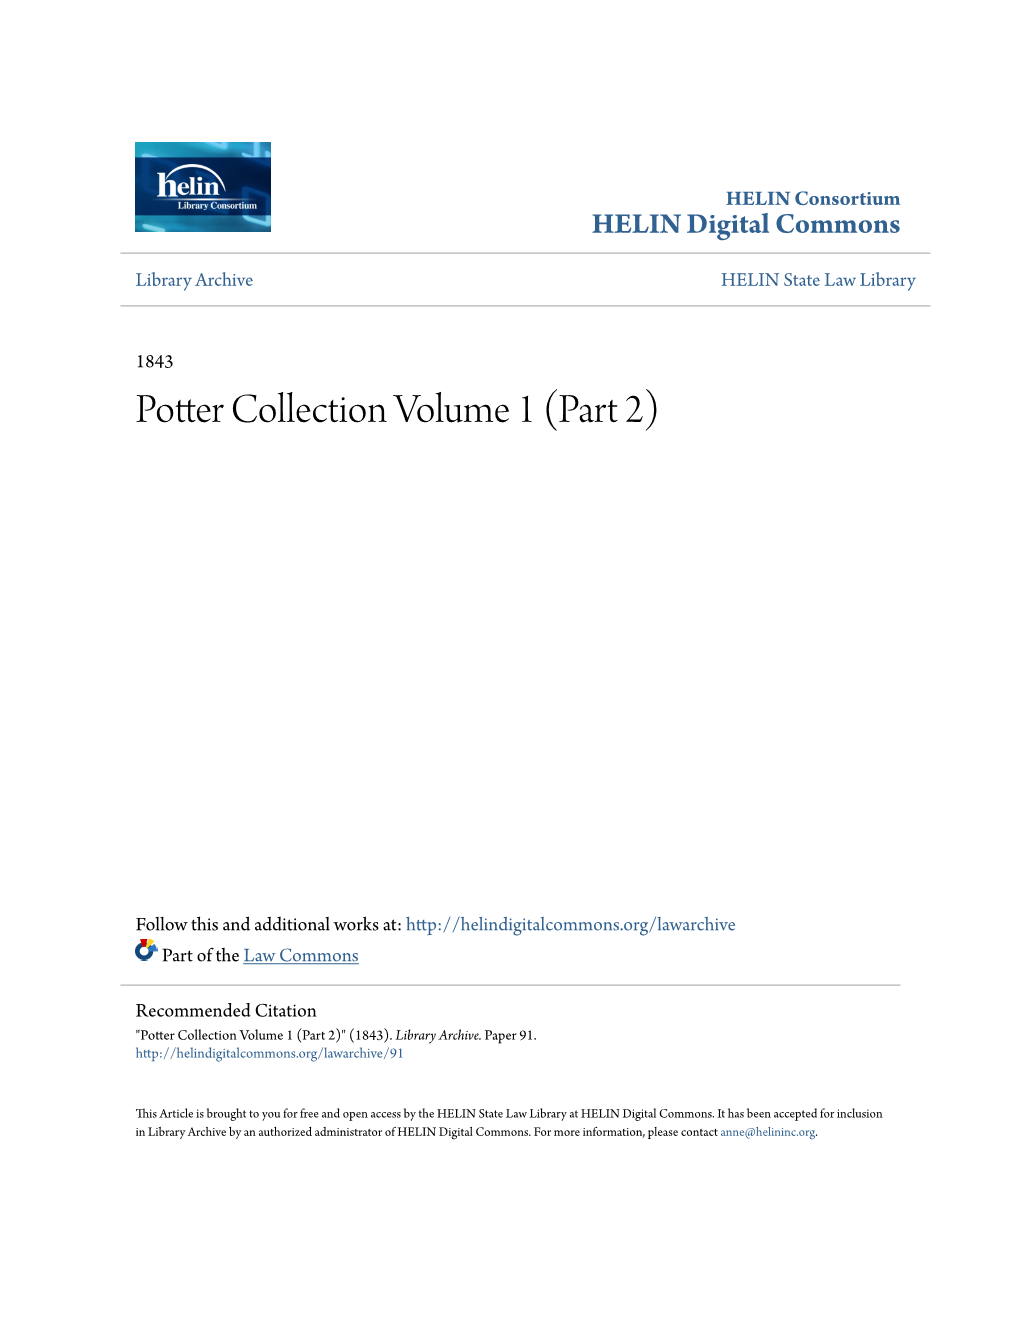 Potter Collection Volume 1 (Part 2)